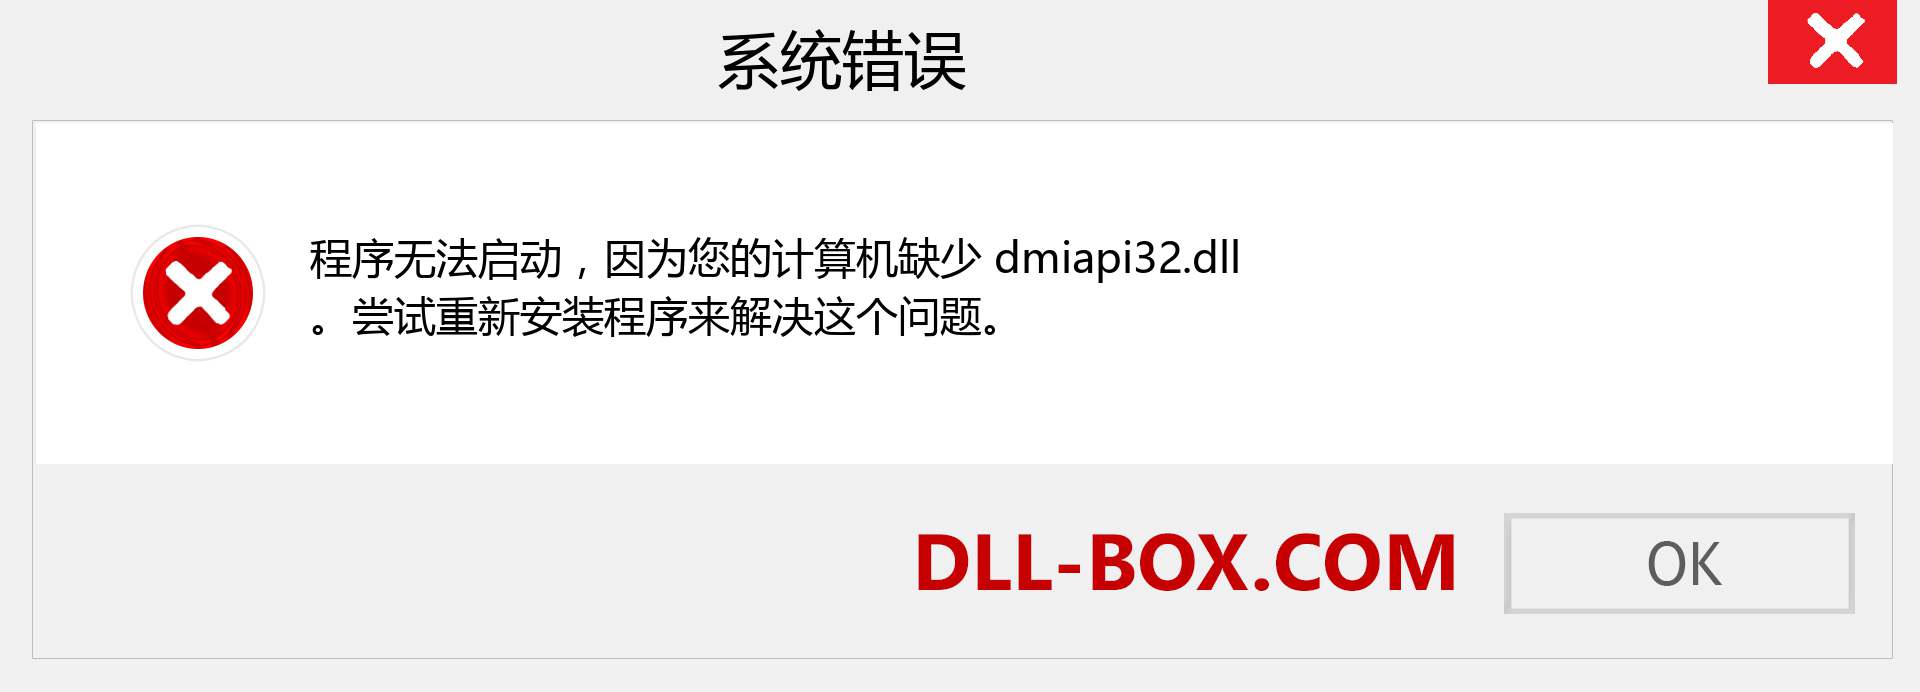 dmiapi32.dll 文件丢失？。 适用于 Windows 7、8、10 的下载 - 修复 Windows、照片、图像上的 dmiapi32 dll 丢失错误